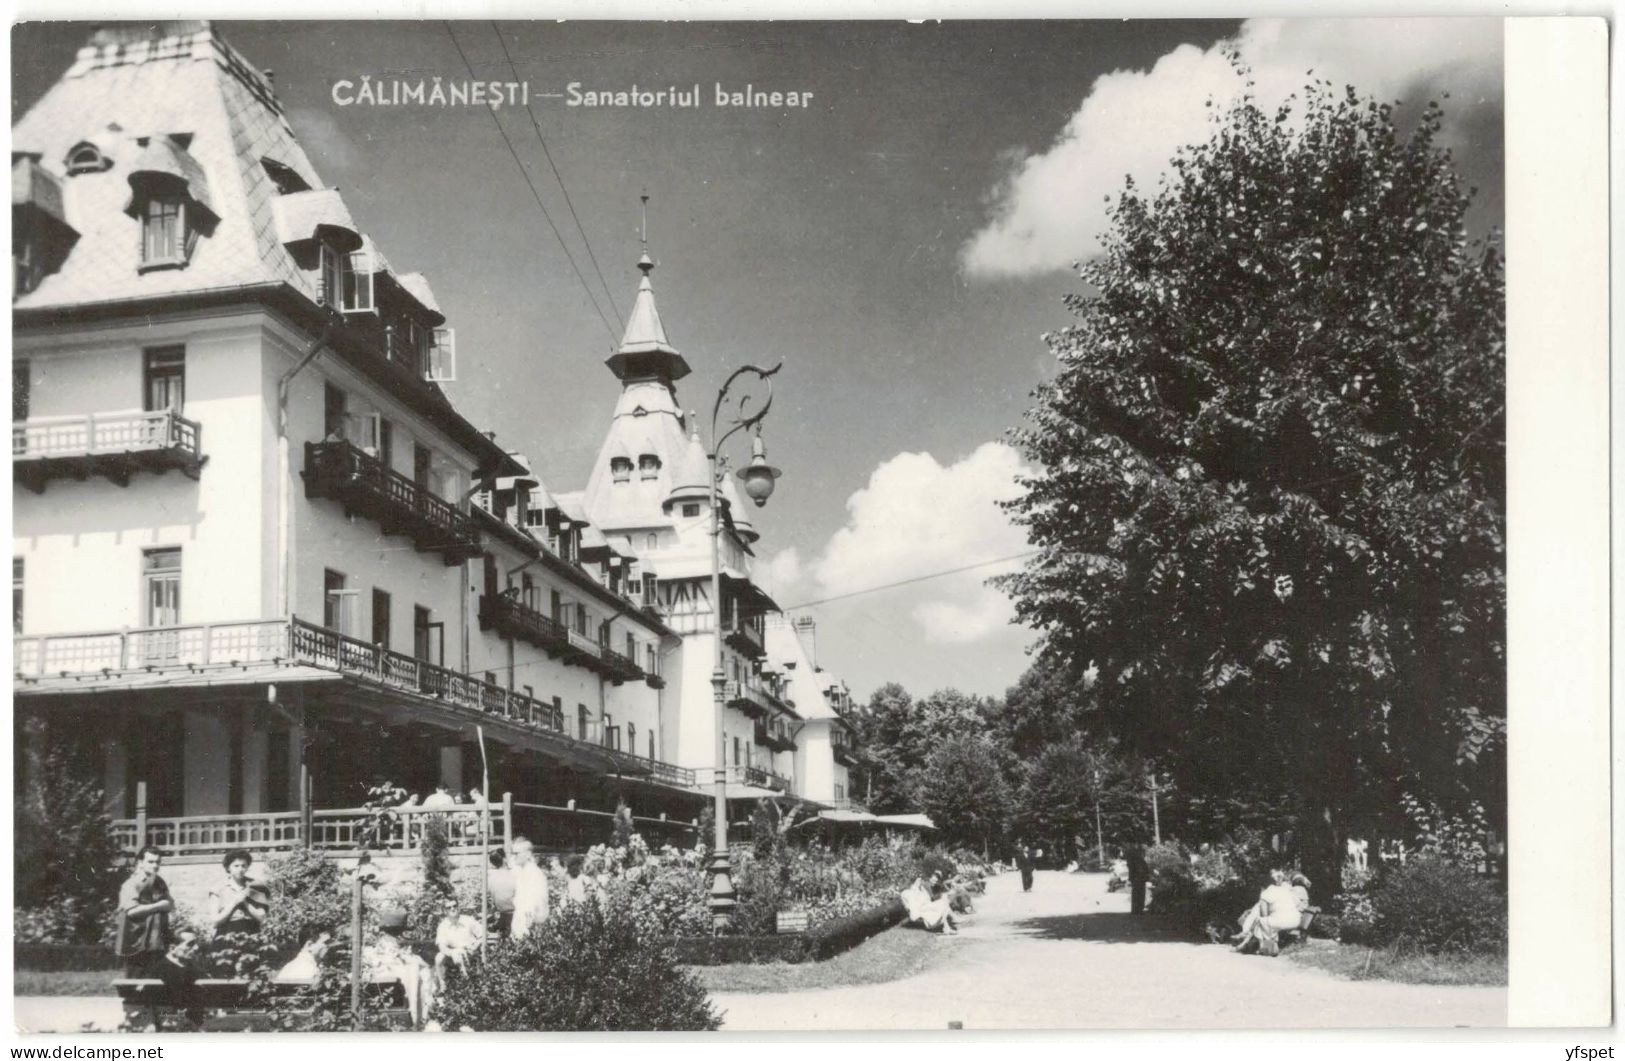 Călimănești Health Resort - Sanatorium - Romania